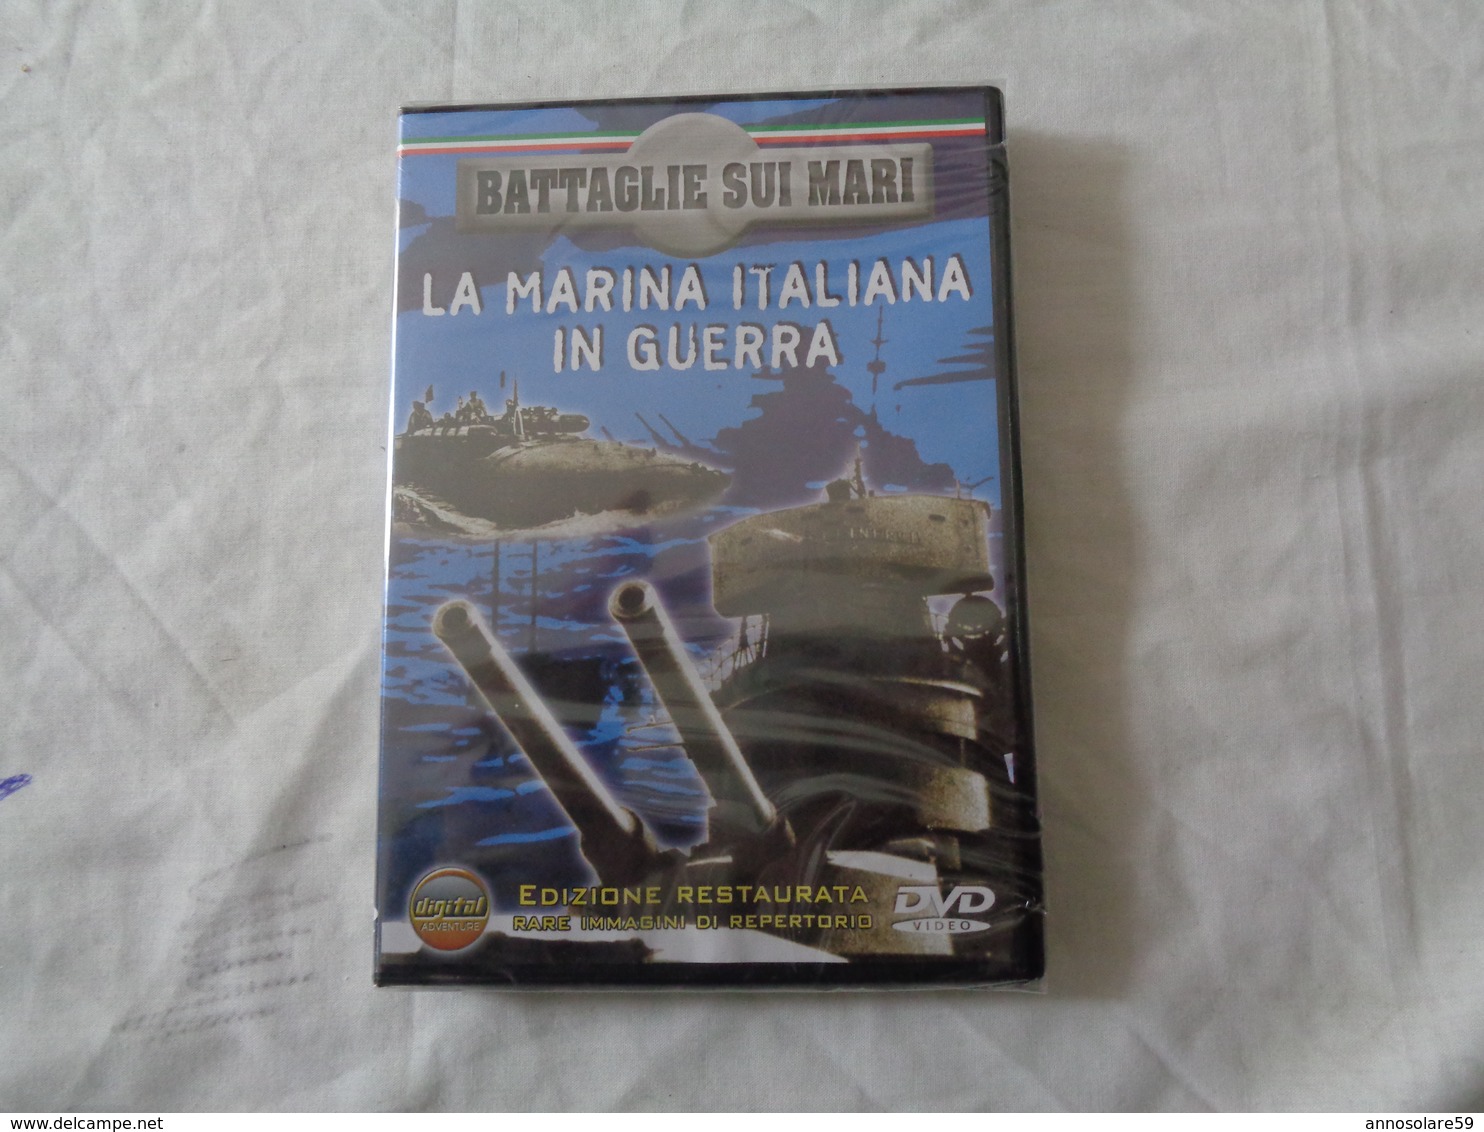 DVD VIDEO: LA MARINA ITALIANA IN GUERRA (BATTAGLIE SUI MARI) DOCUMENTARIO - SIGILLATO - LEGGI - Musik-DVD's